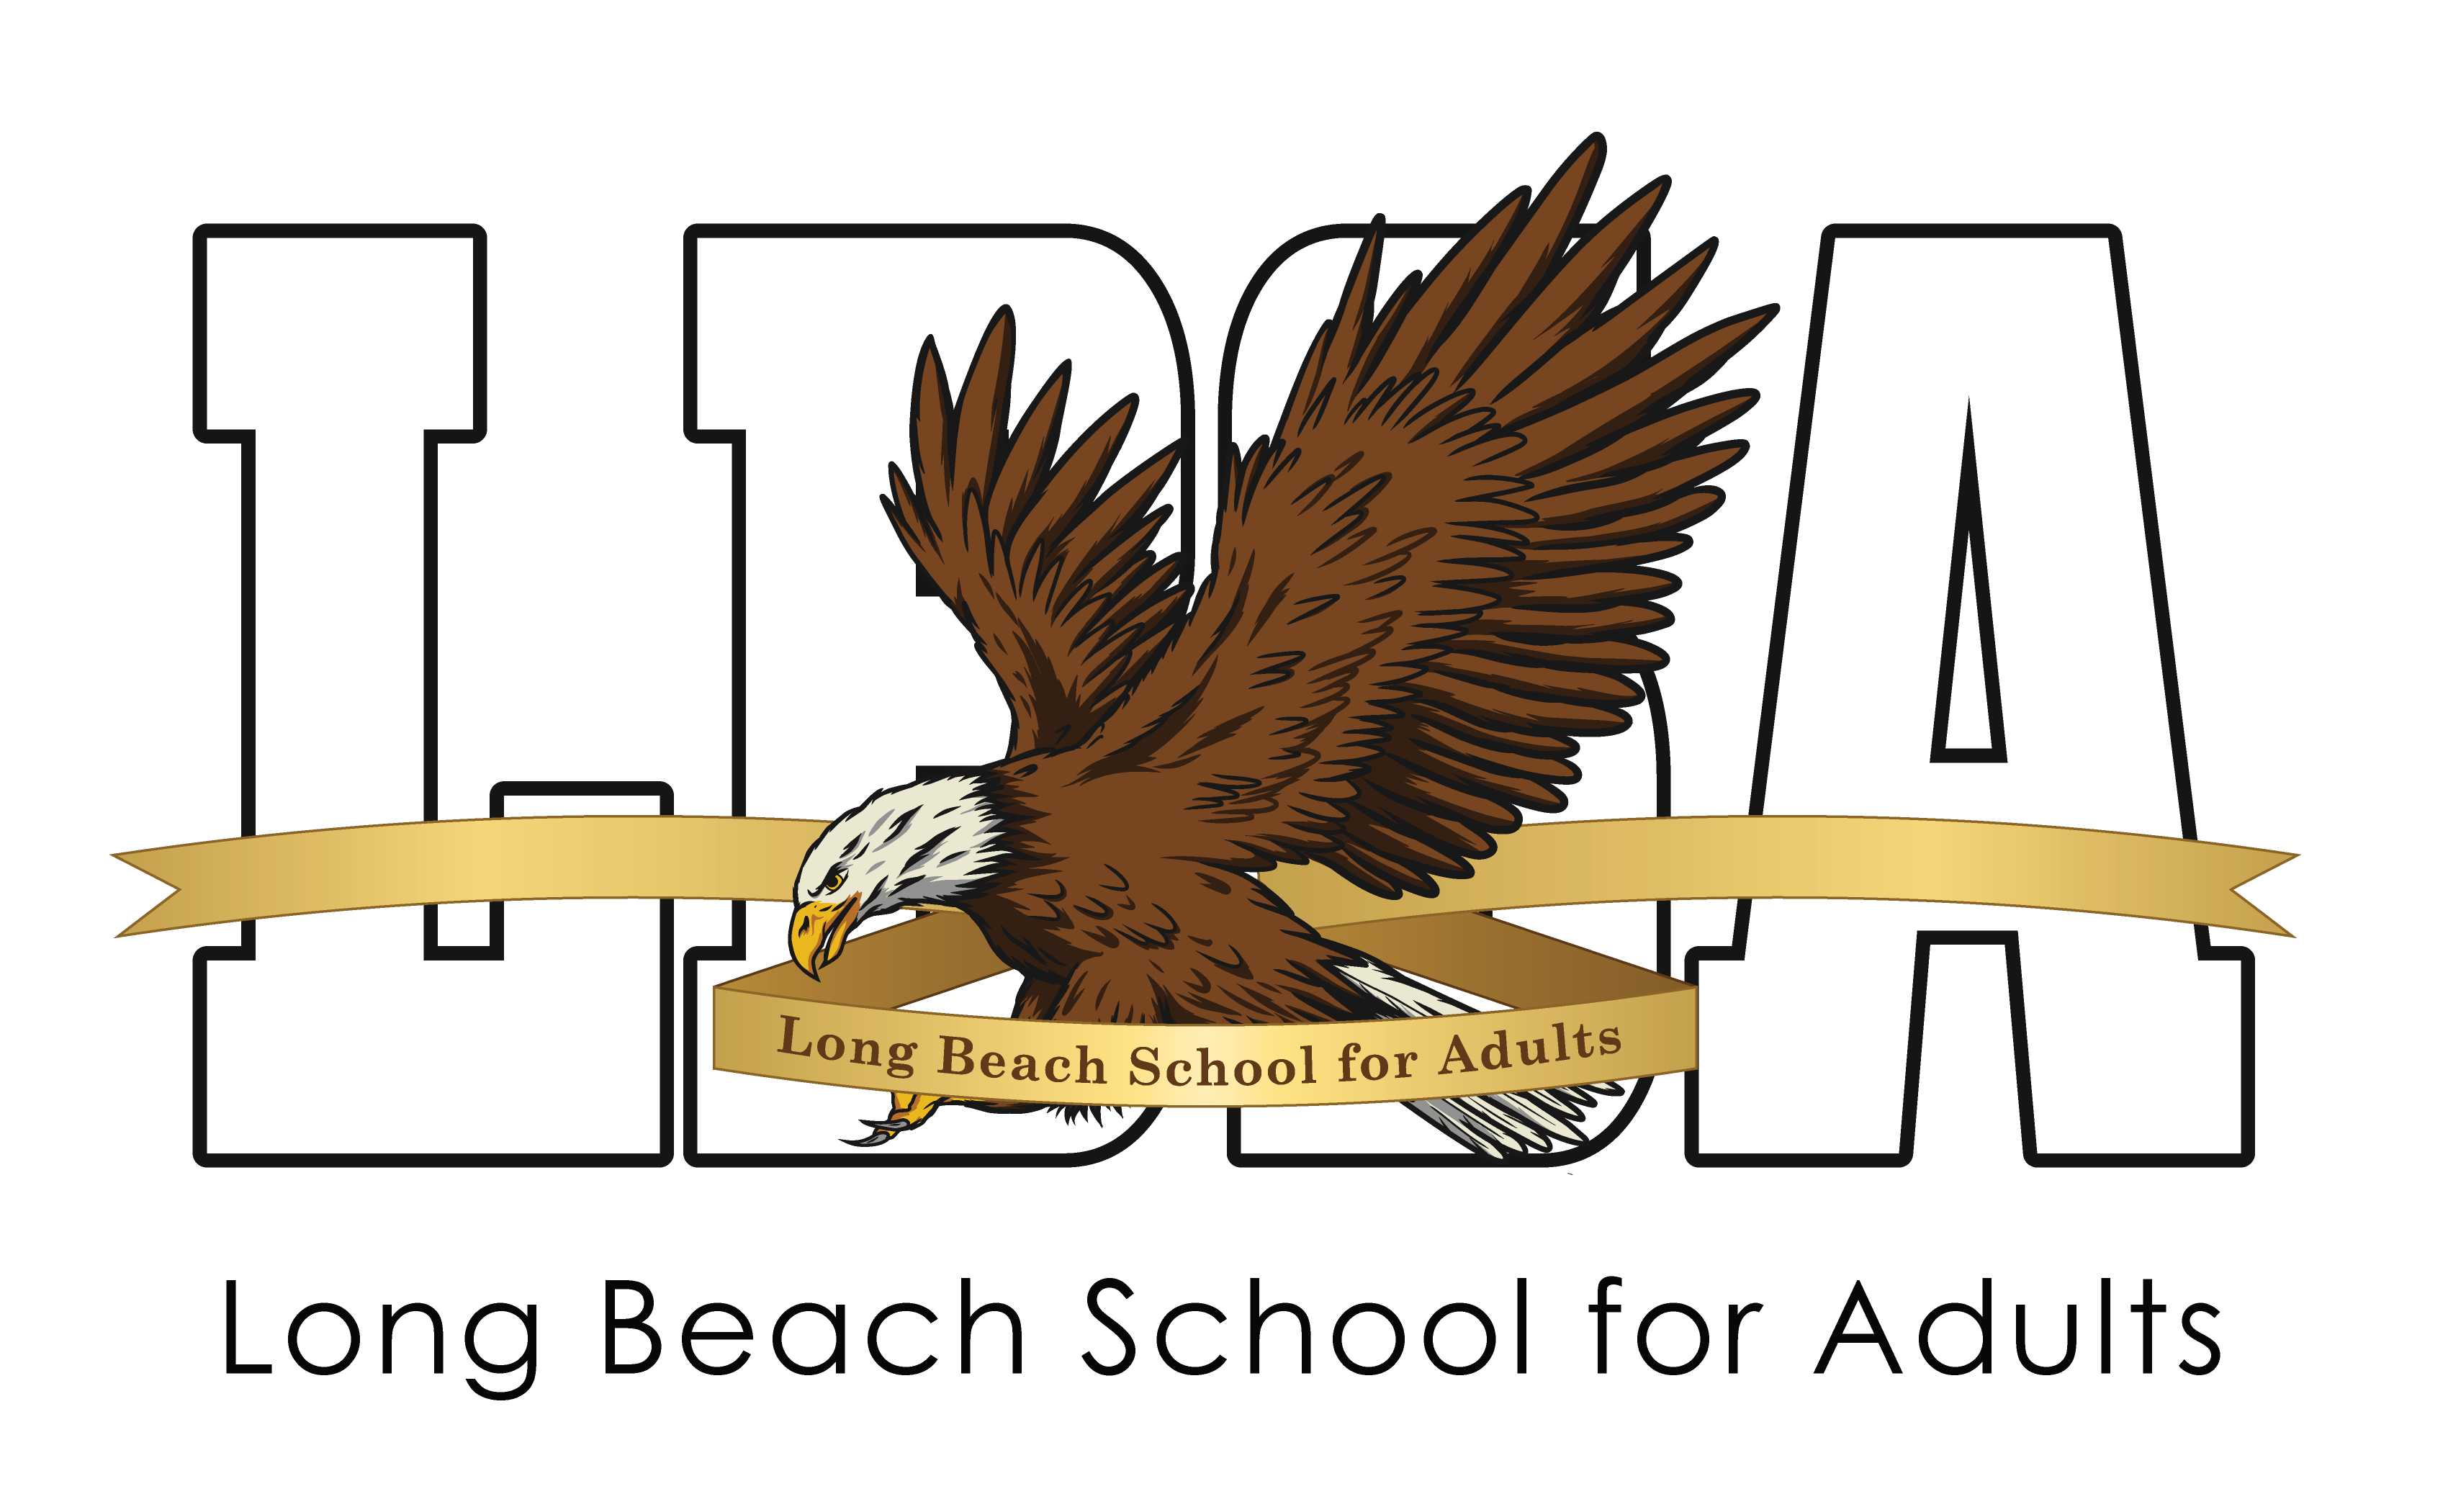 Long Beach School for Adults logo